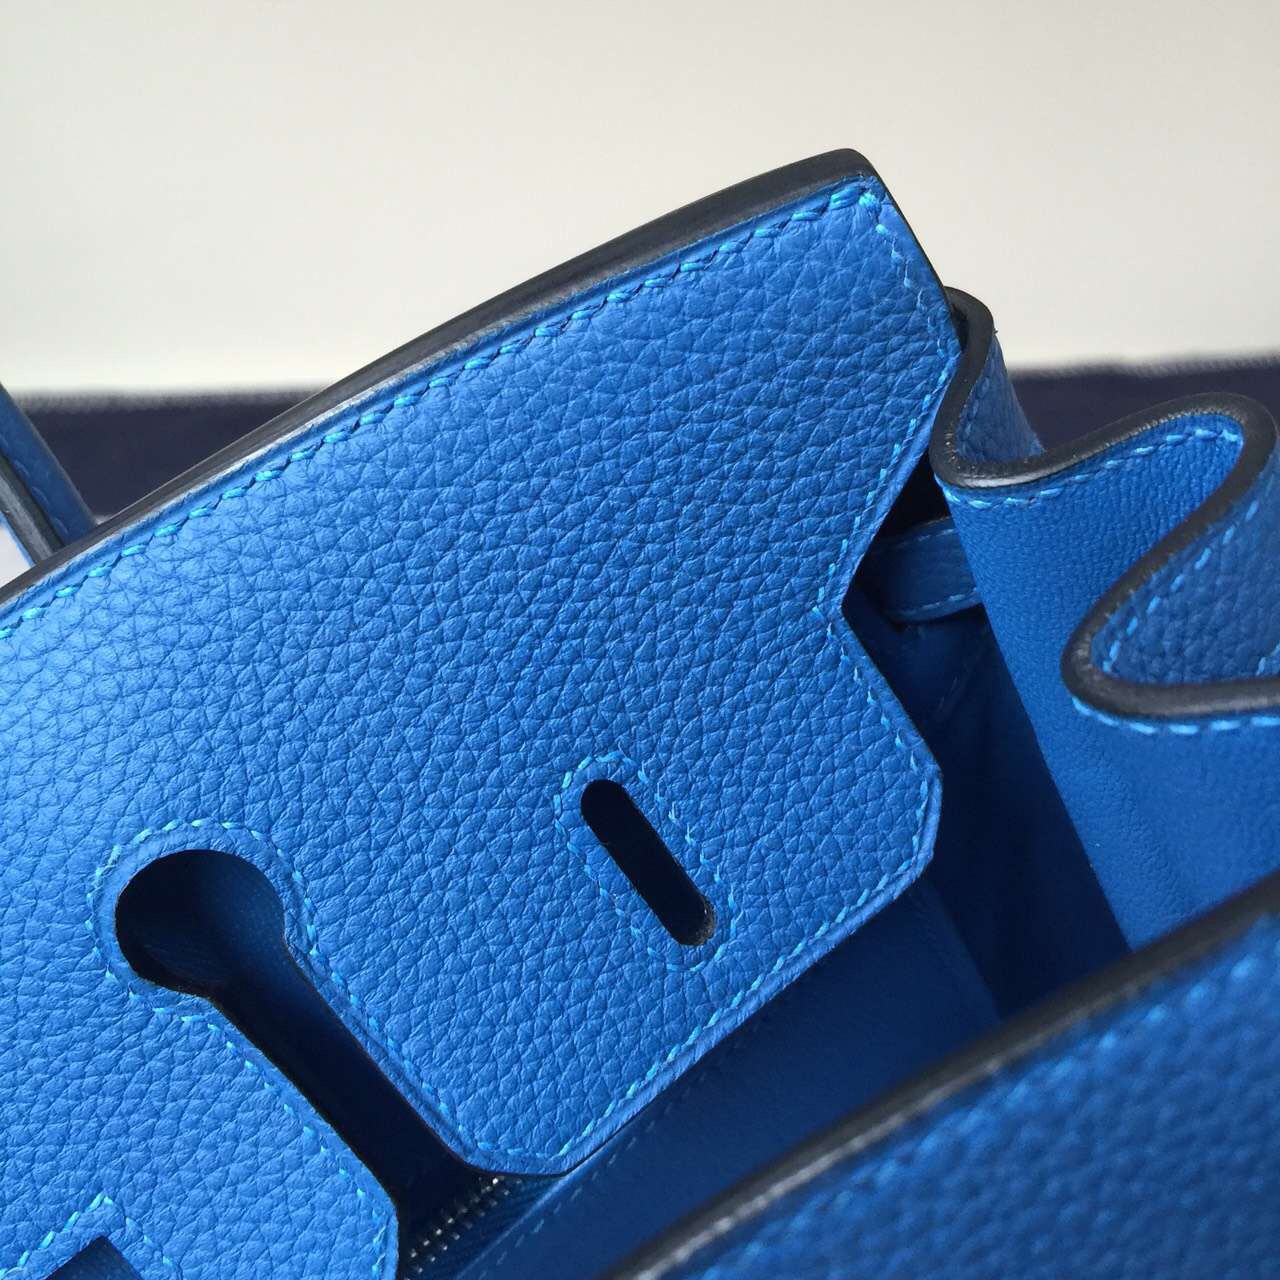 Hand Stitching Hermes Birkin25cm 7Q Mykono Blue Togo Leather Handbag